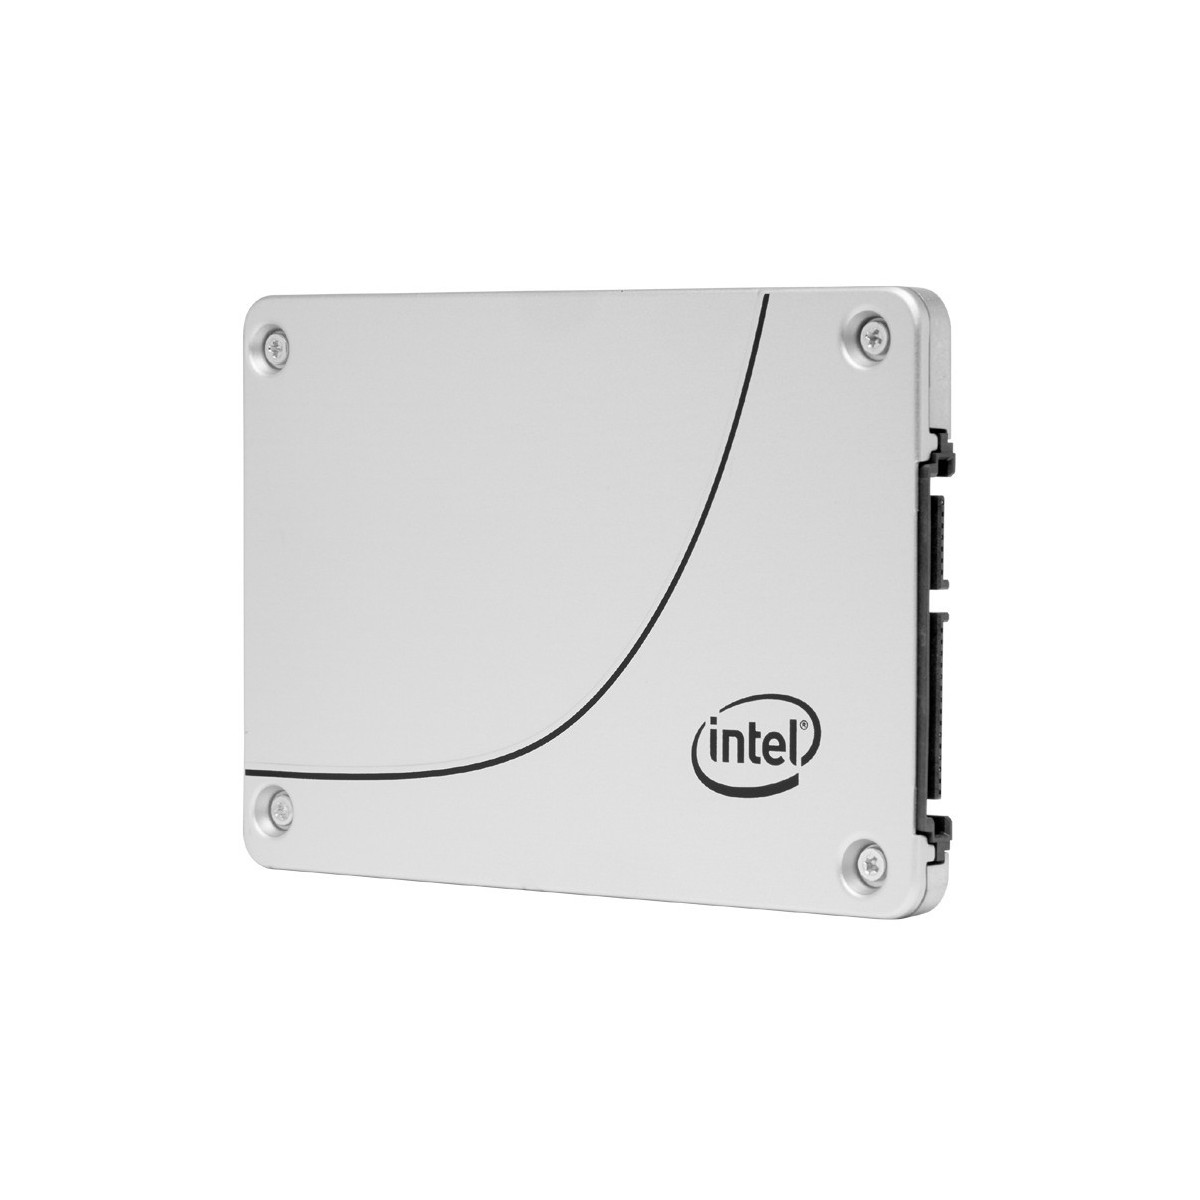 Intel SSD DC S3520 Series (960GB, 2.5in SATA 6Gb/s, 3D1, MLC) 7mm, Generic Single Pack